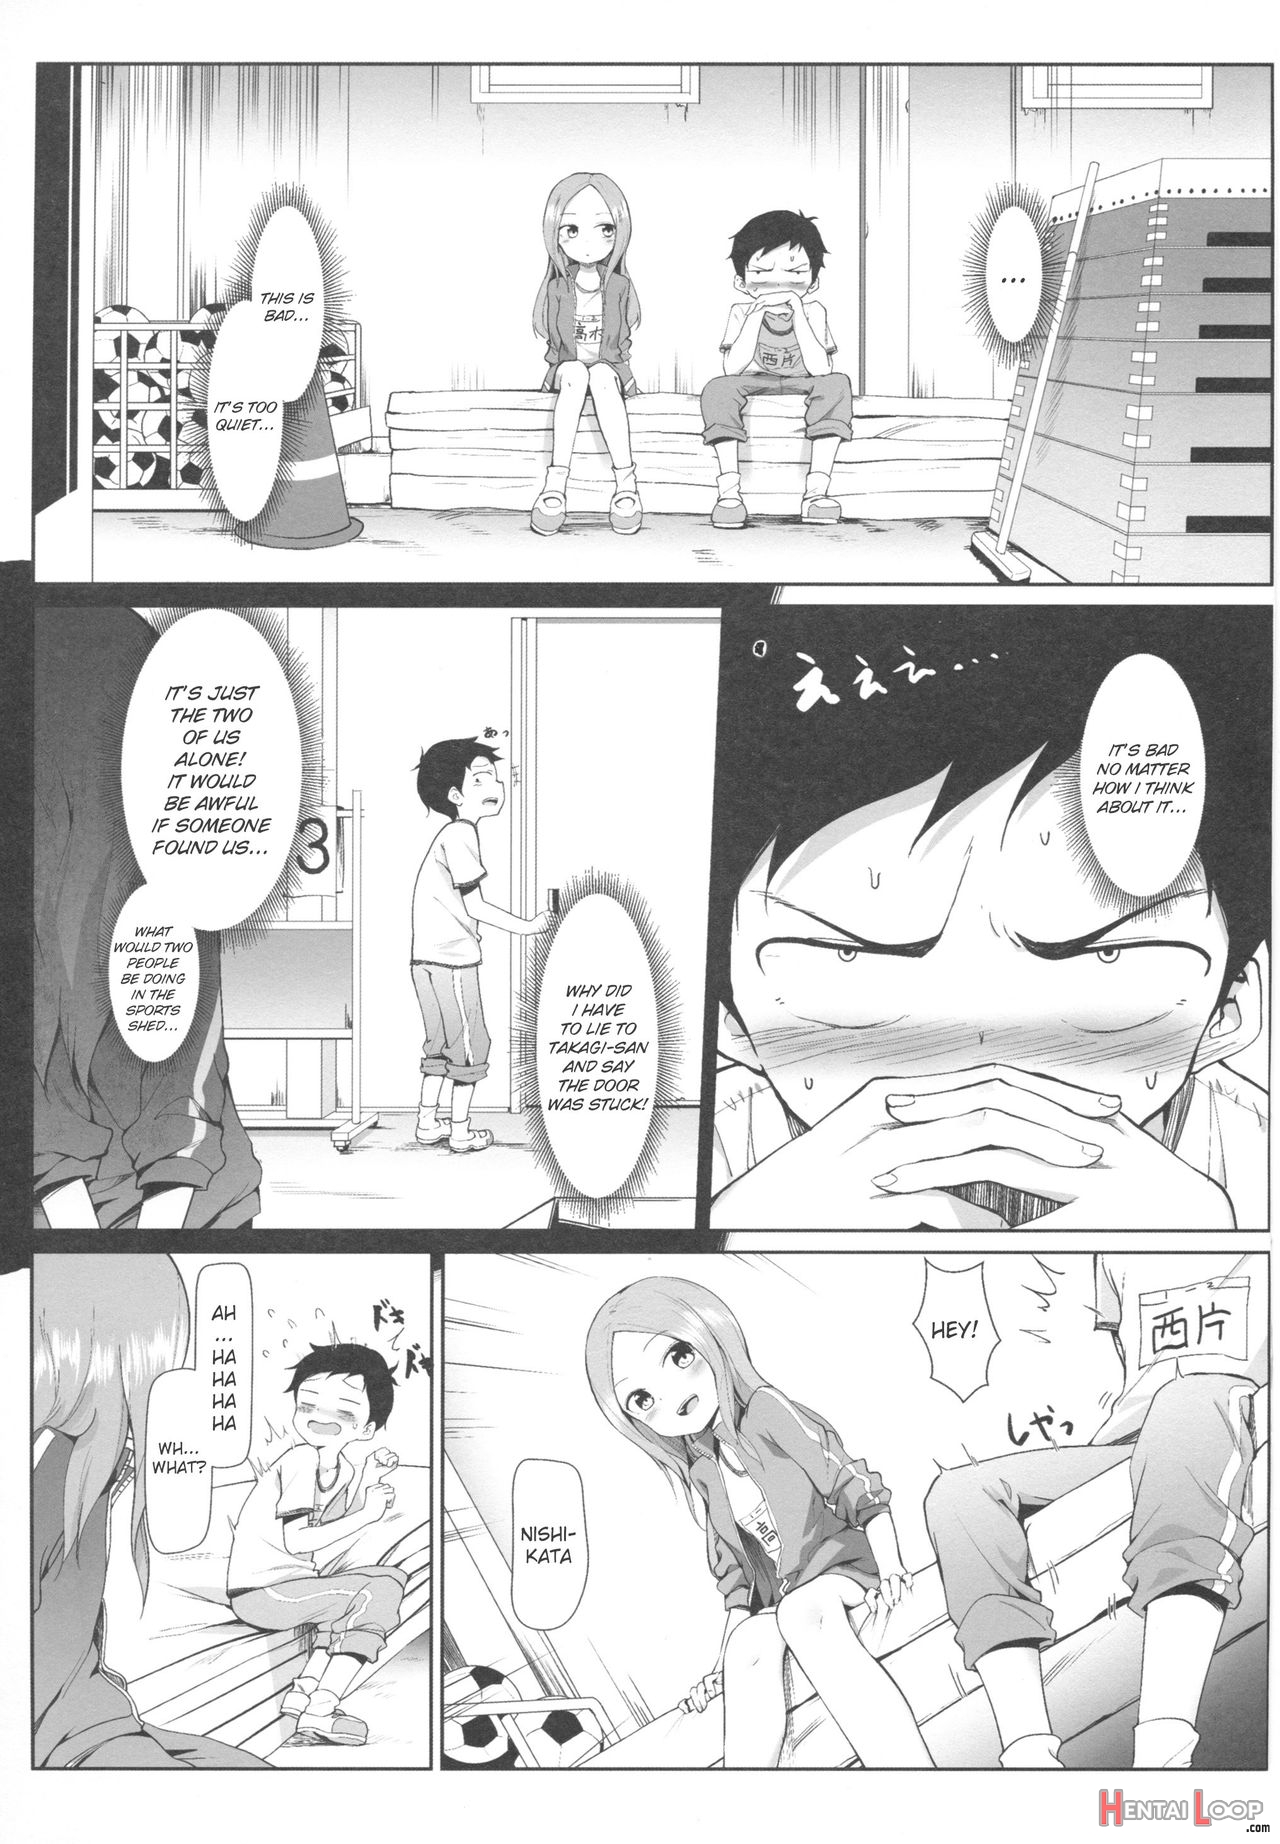 Mixed With Takagi-san's Sweat page 2